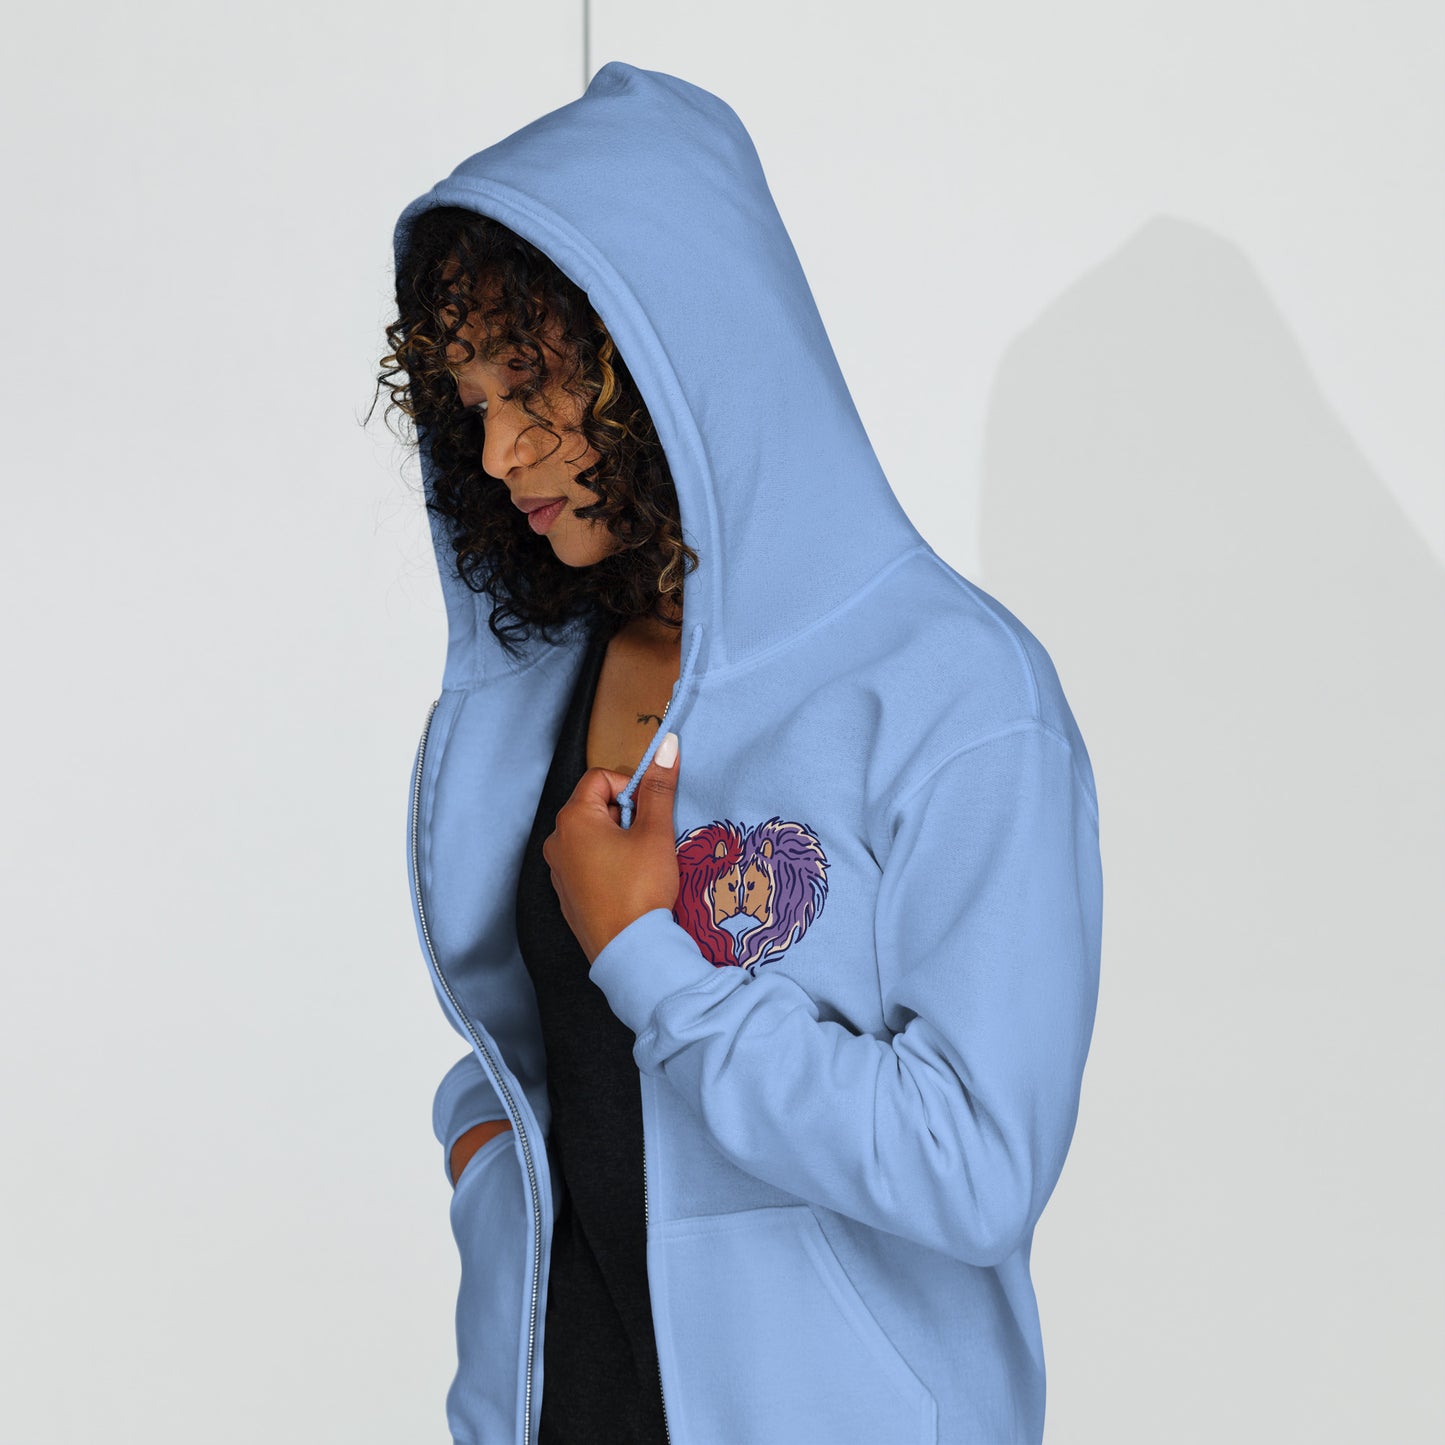 Lion Heart | Unisex heavy blend zip hoodie